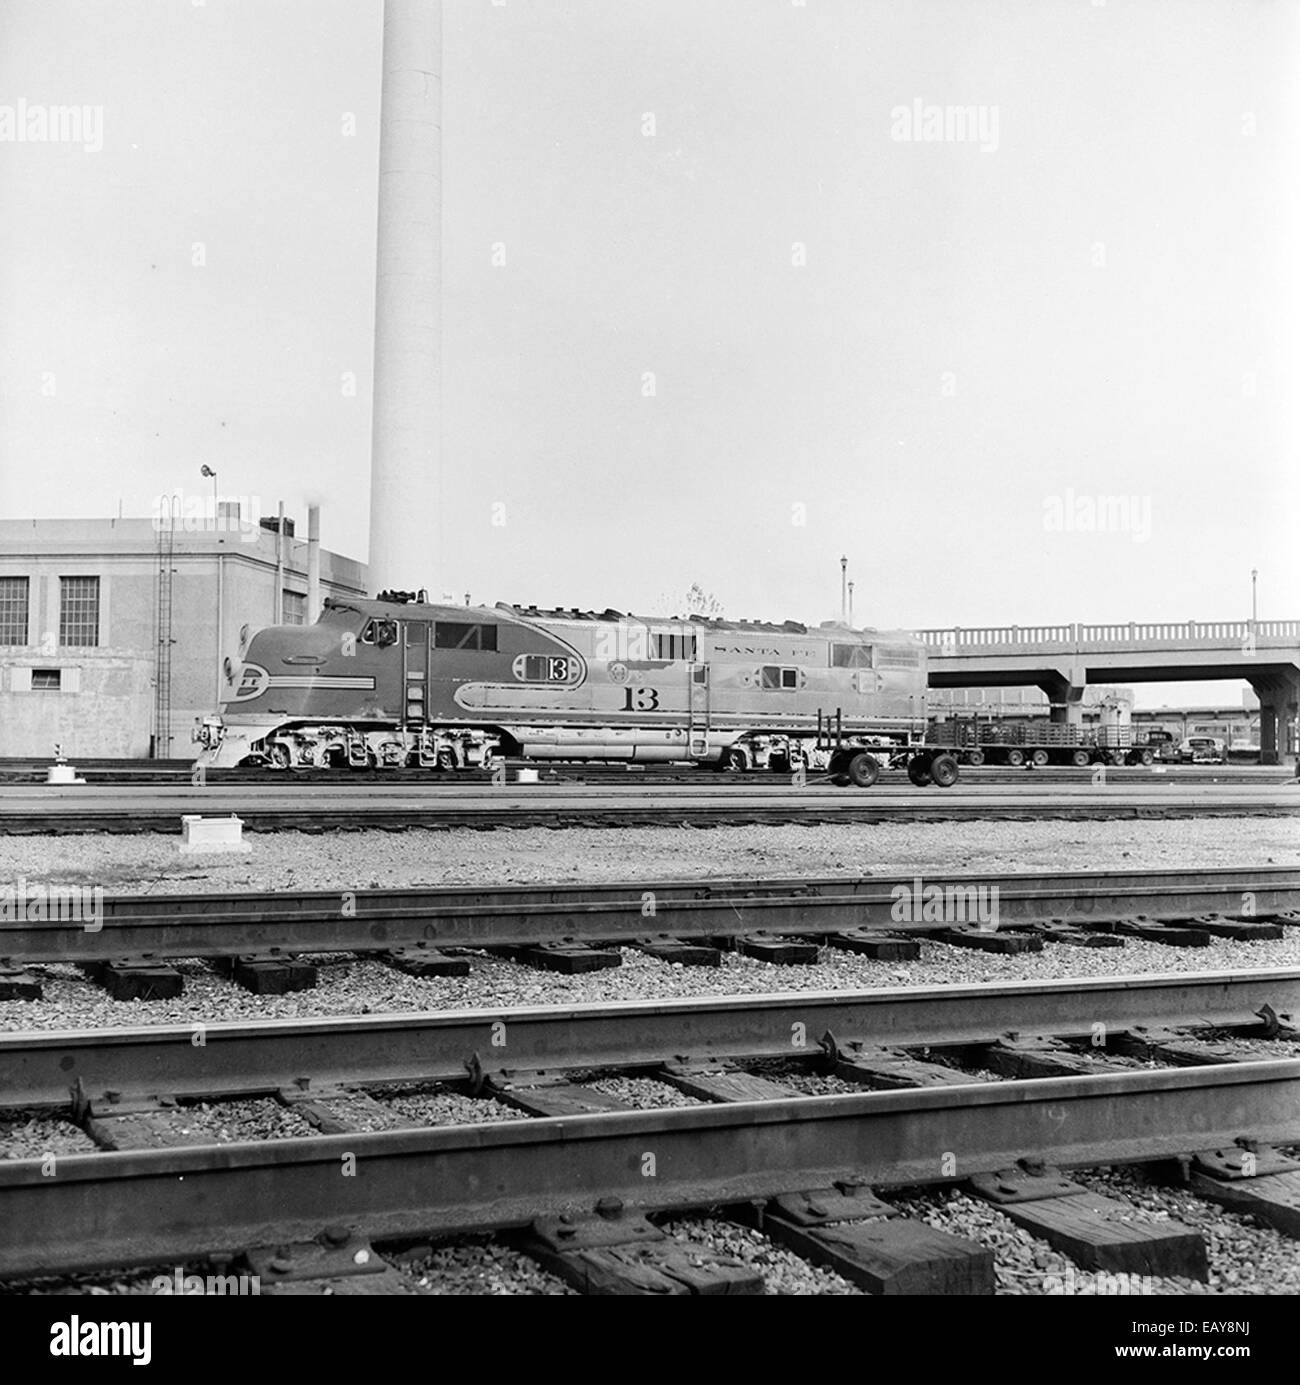 [Atchison, Topeka, & Santa Fe, Diesel Electric Passenger Locomotive No. 13, in Front of Smokestack] [Atchison, Topeka, & Santa Fe, Diesel Electric Passenger Locomotive No. 13, in Front of Smokestack] Stock Photo